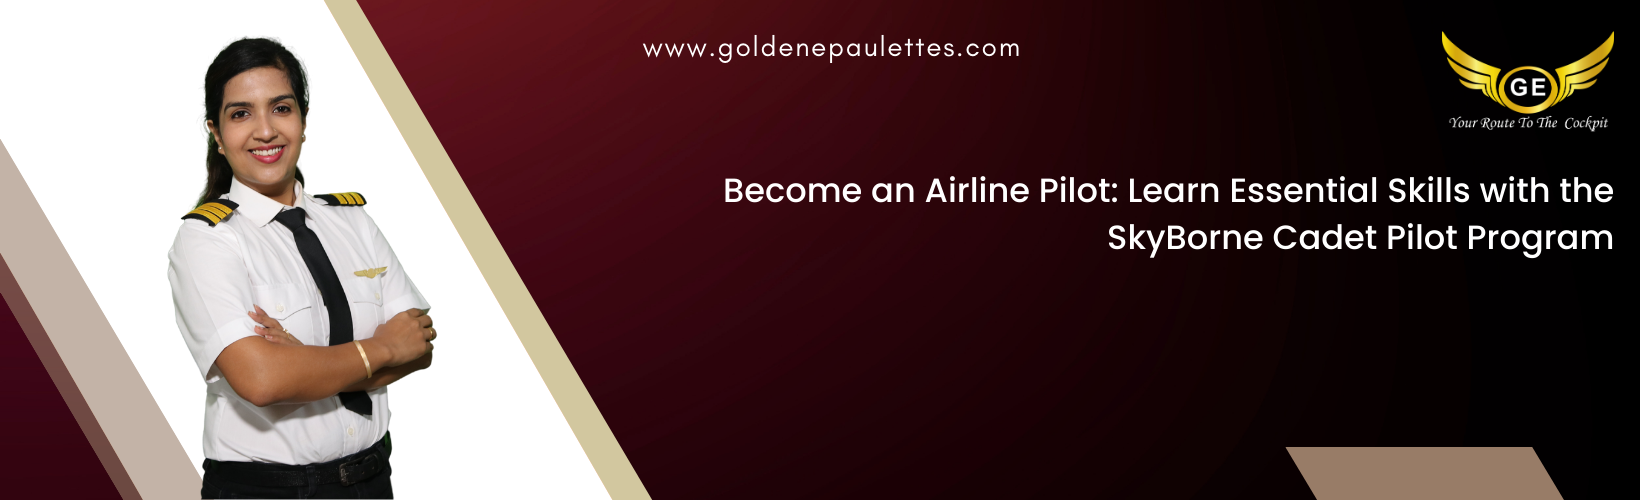 Developing Your Skills as an Airline Pilot Through the SkyBorne Cadet Pilot Program